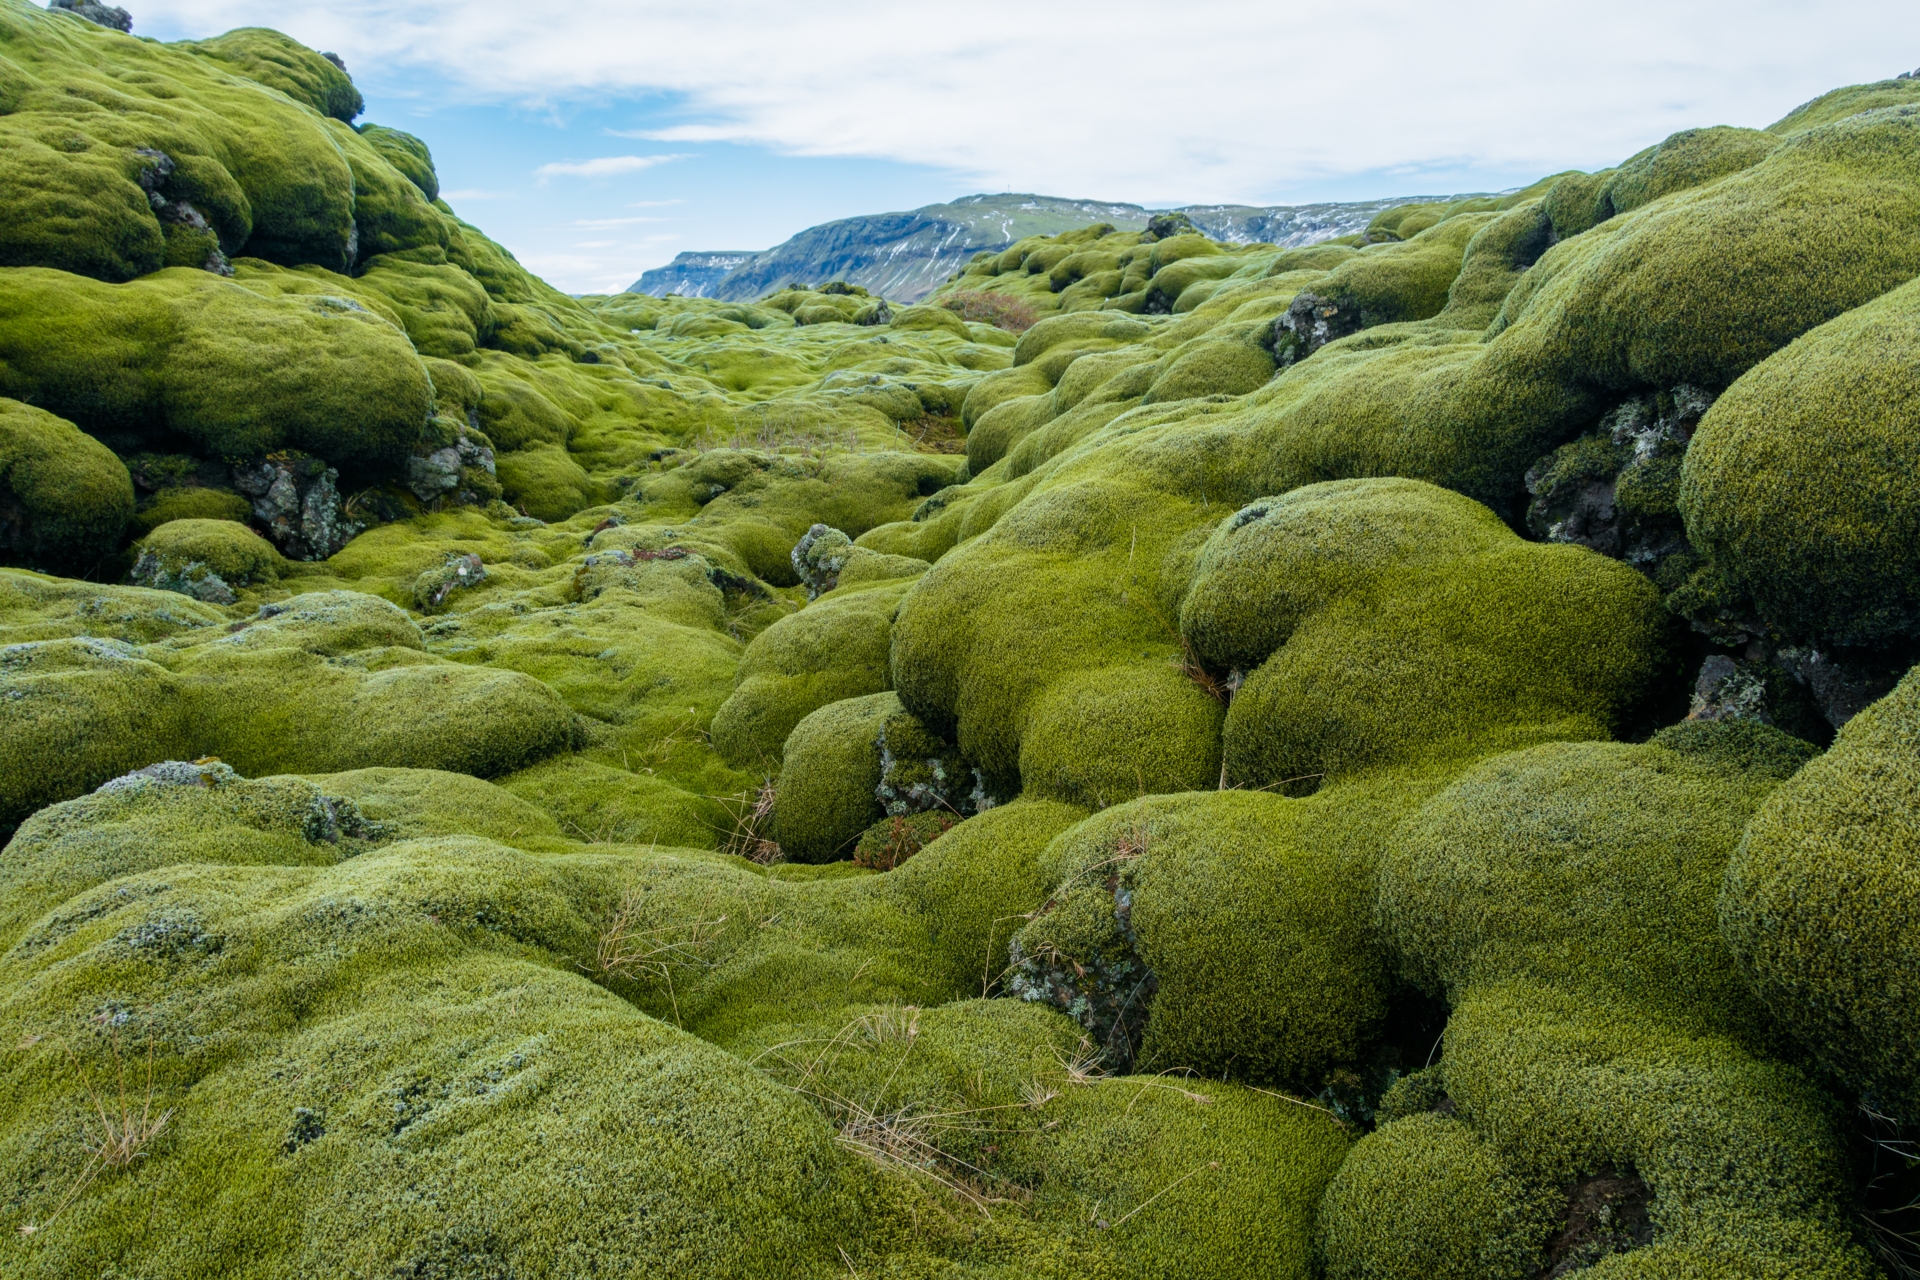 Lava field - Intrepid Iceland: geysers and glaciers